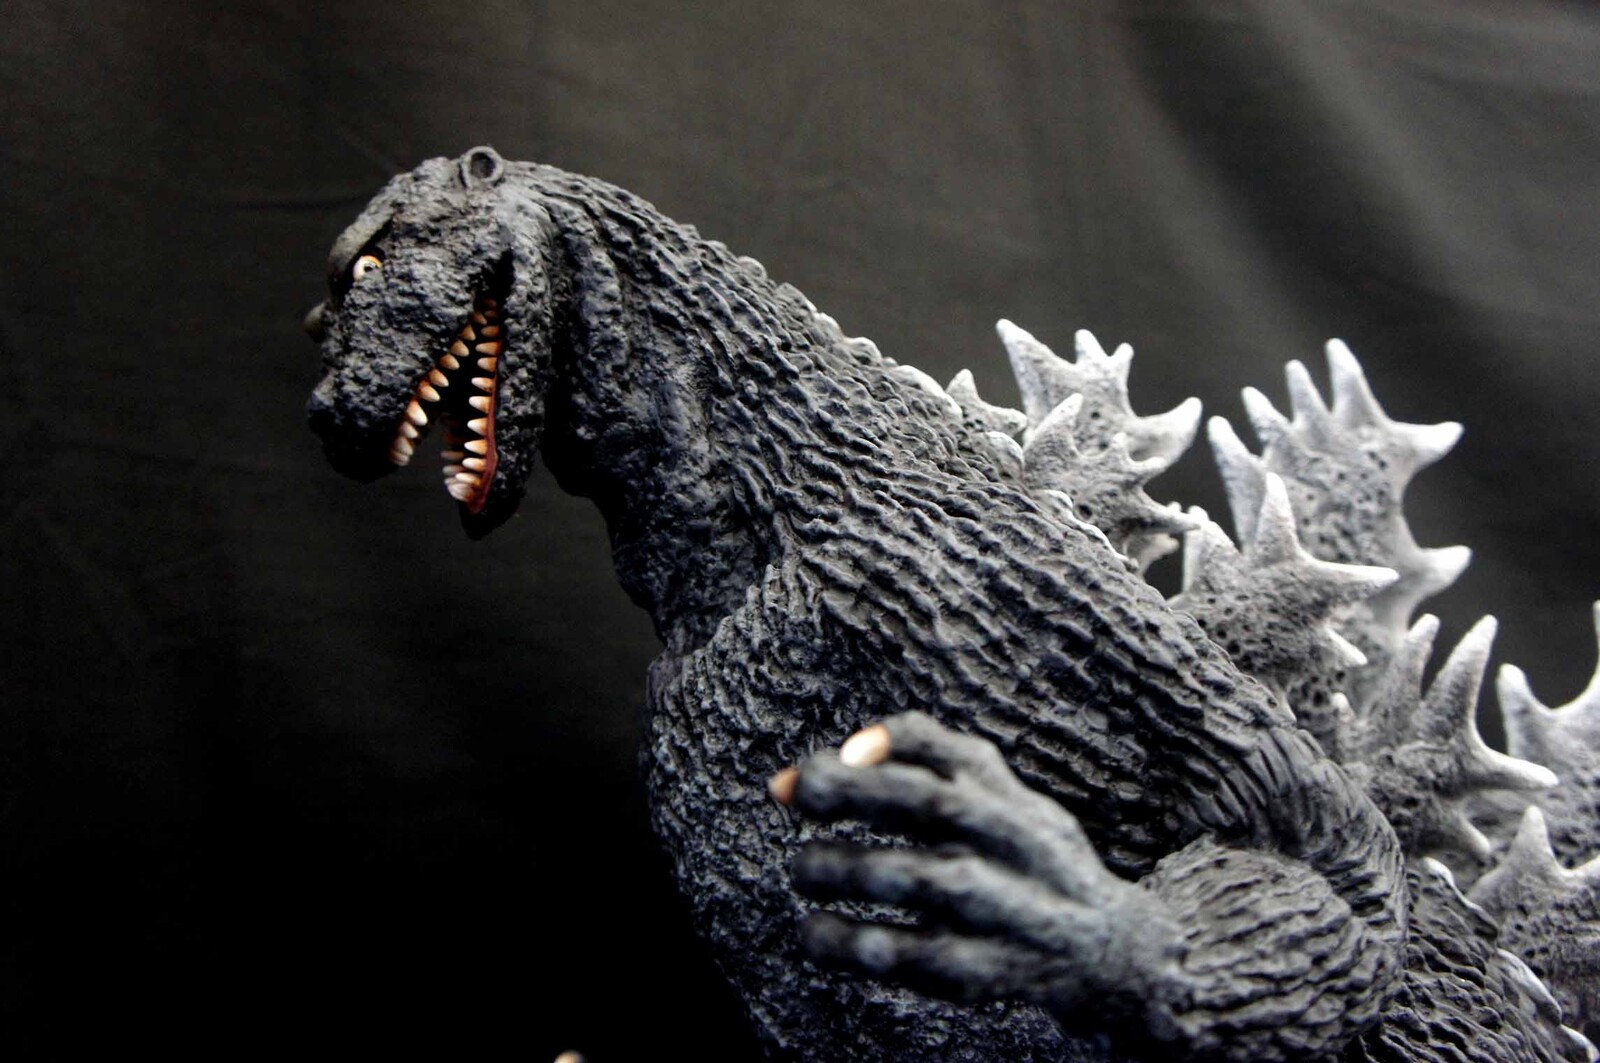 1954 Godzilla 60 cm Art Statue 
初代 ゴジラ
https://www.solidart.club/